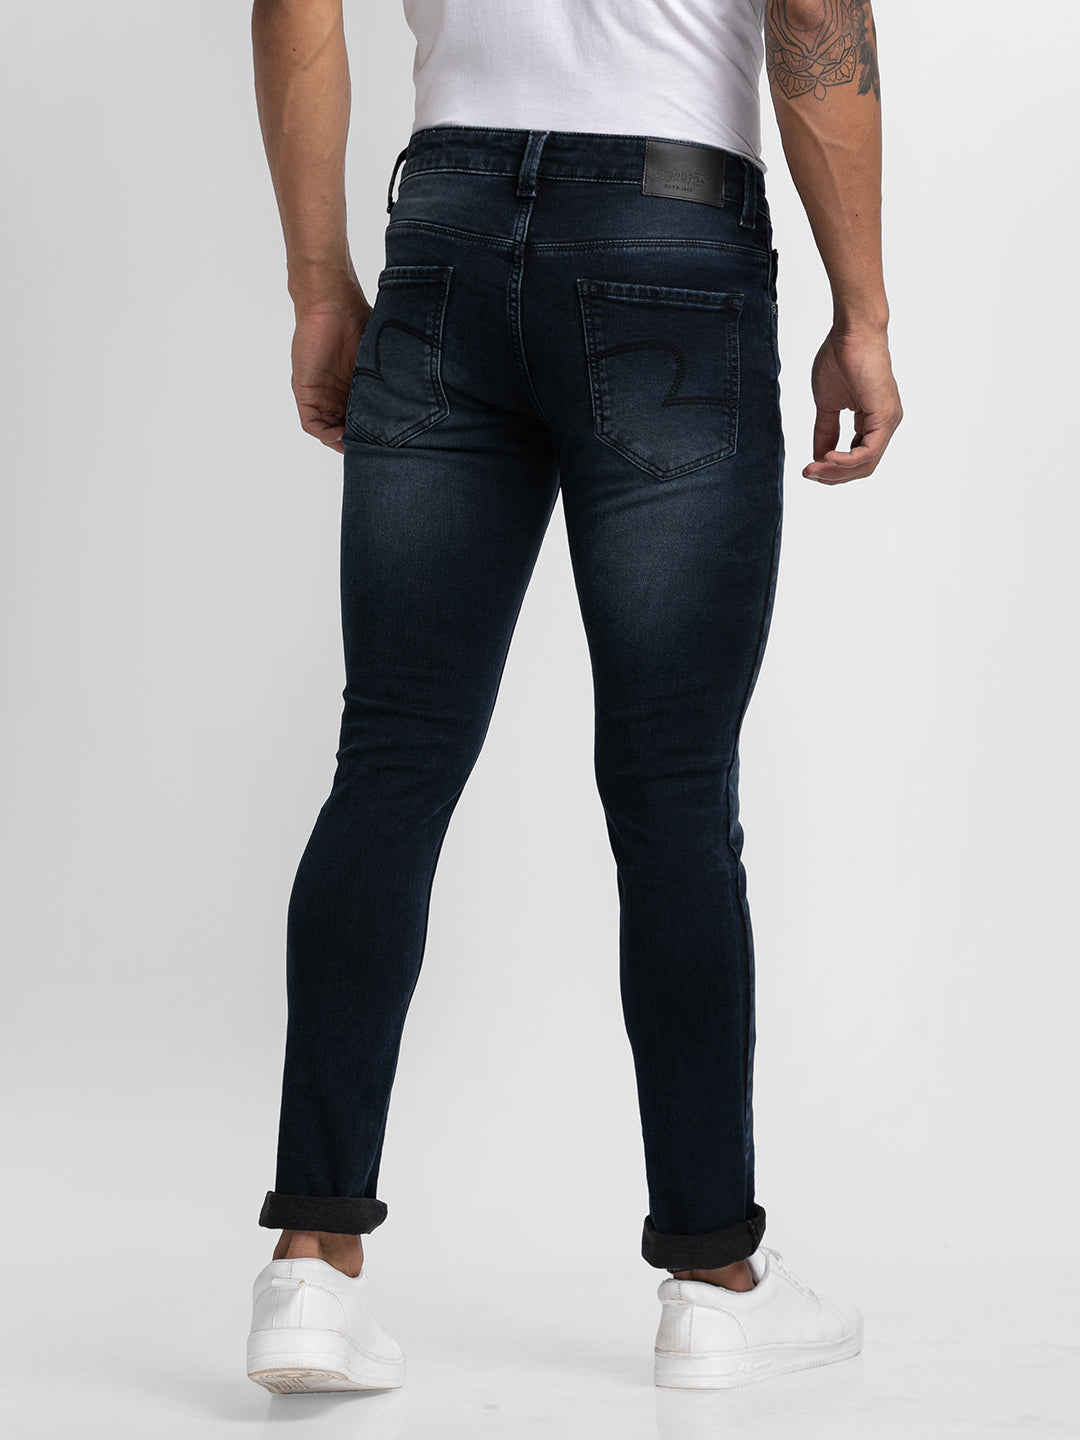 Spykar Black Indigo Cotton Slim Fit Narrow Length Jeans For Men (Skinny)